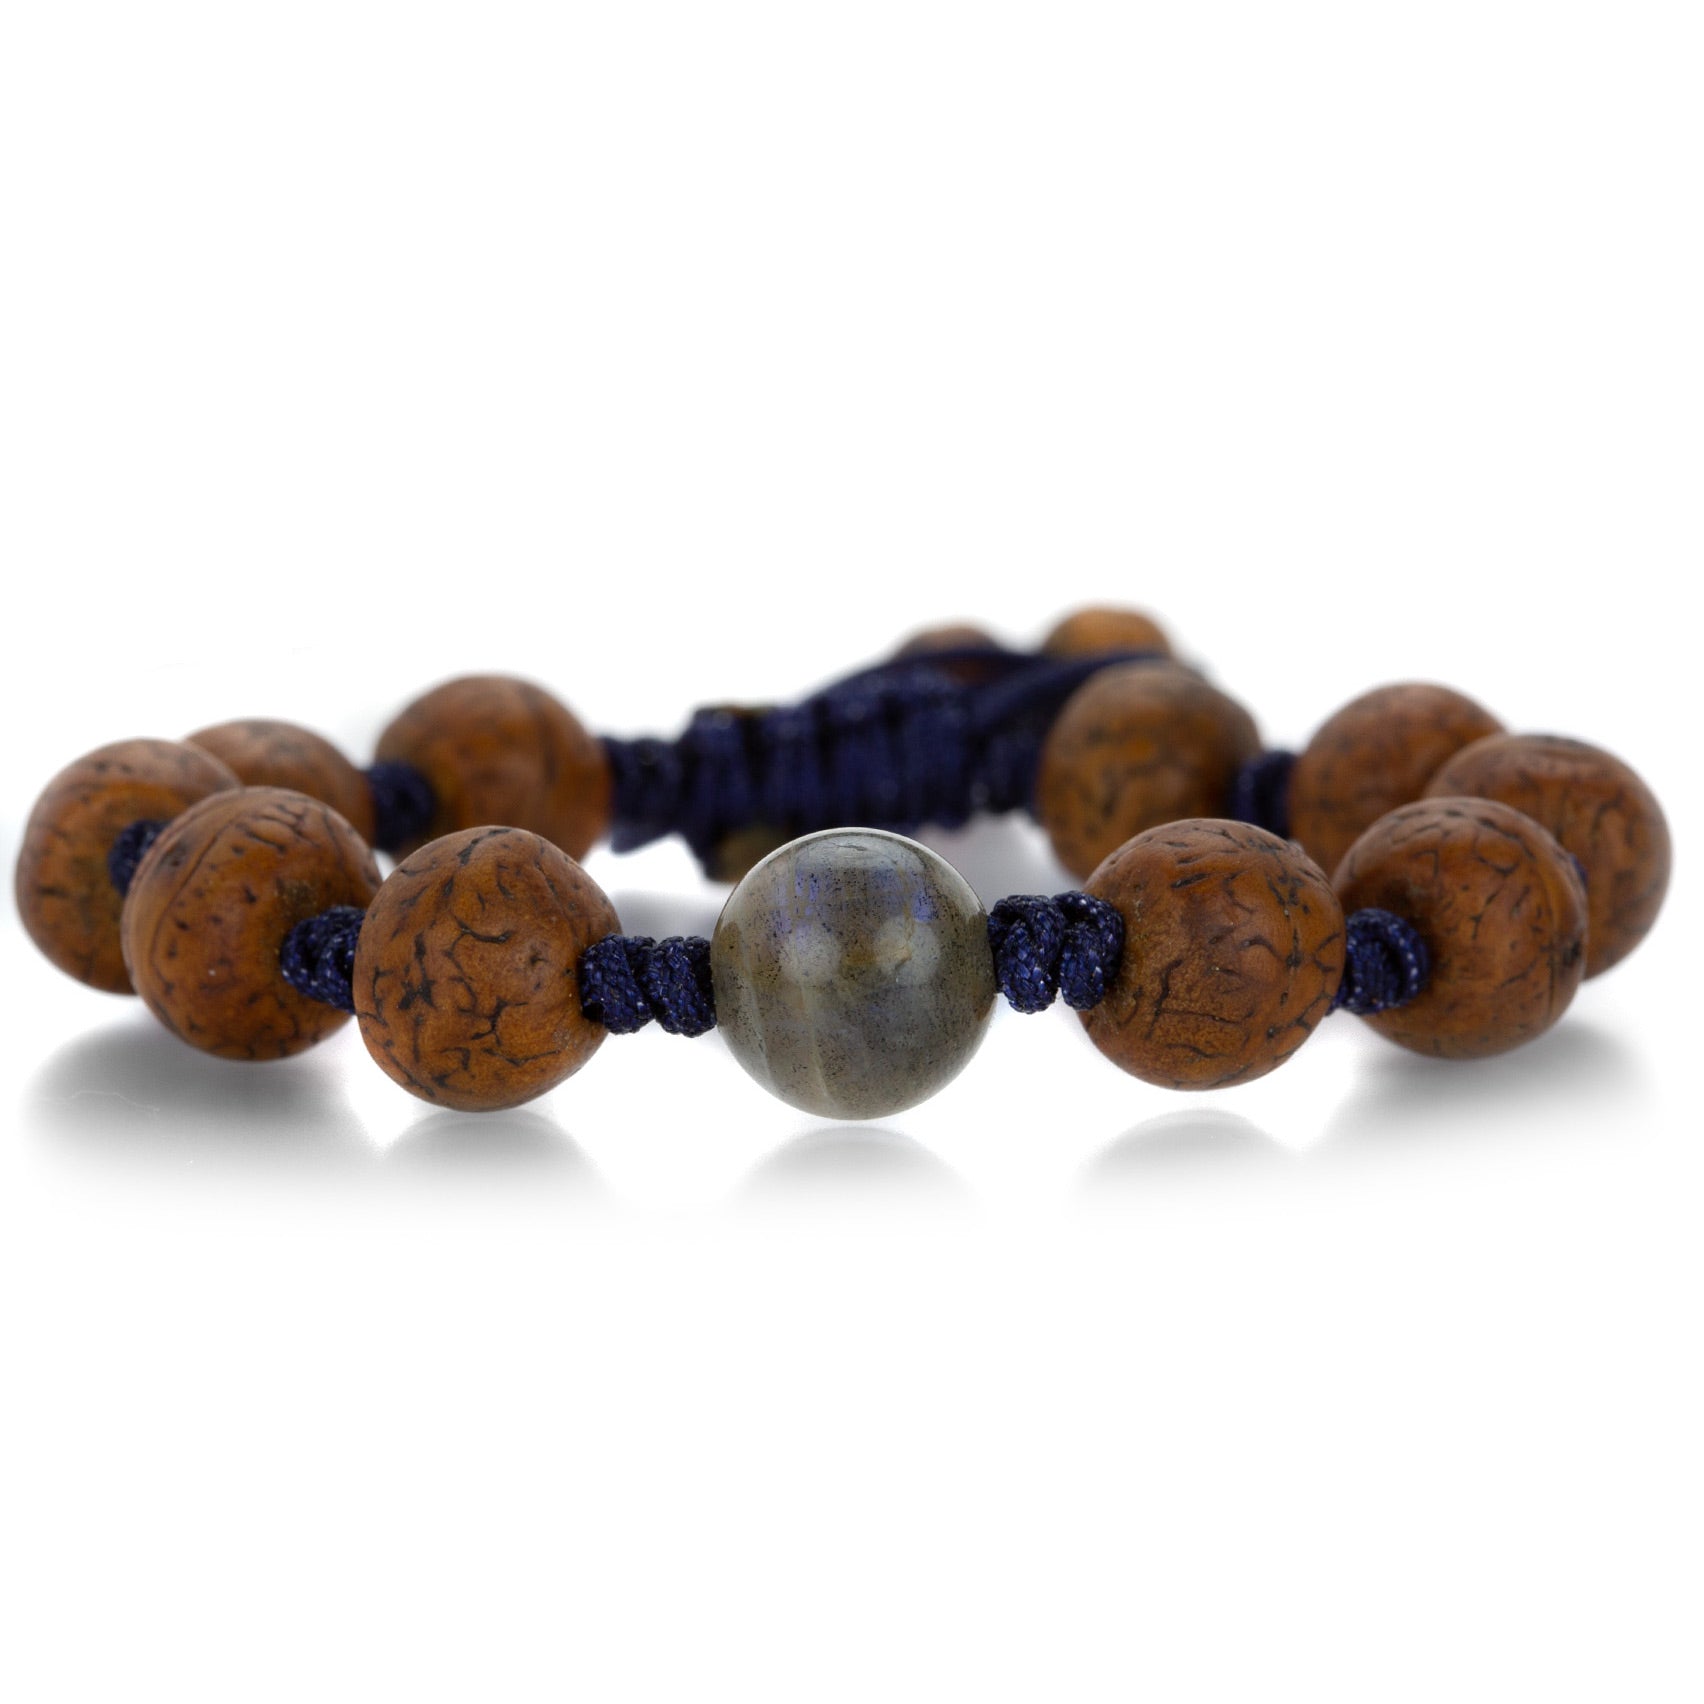 Joseph Brooks Antique Bodhi Seed Bead Bracelet with Labradorite